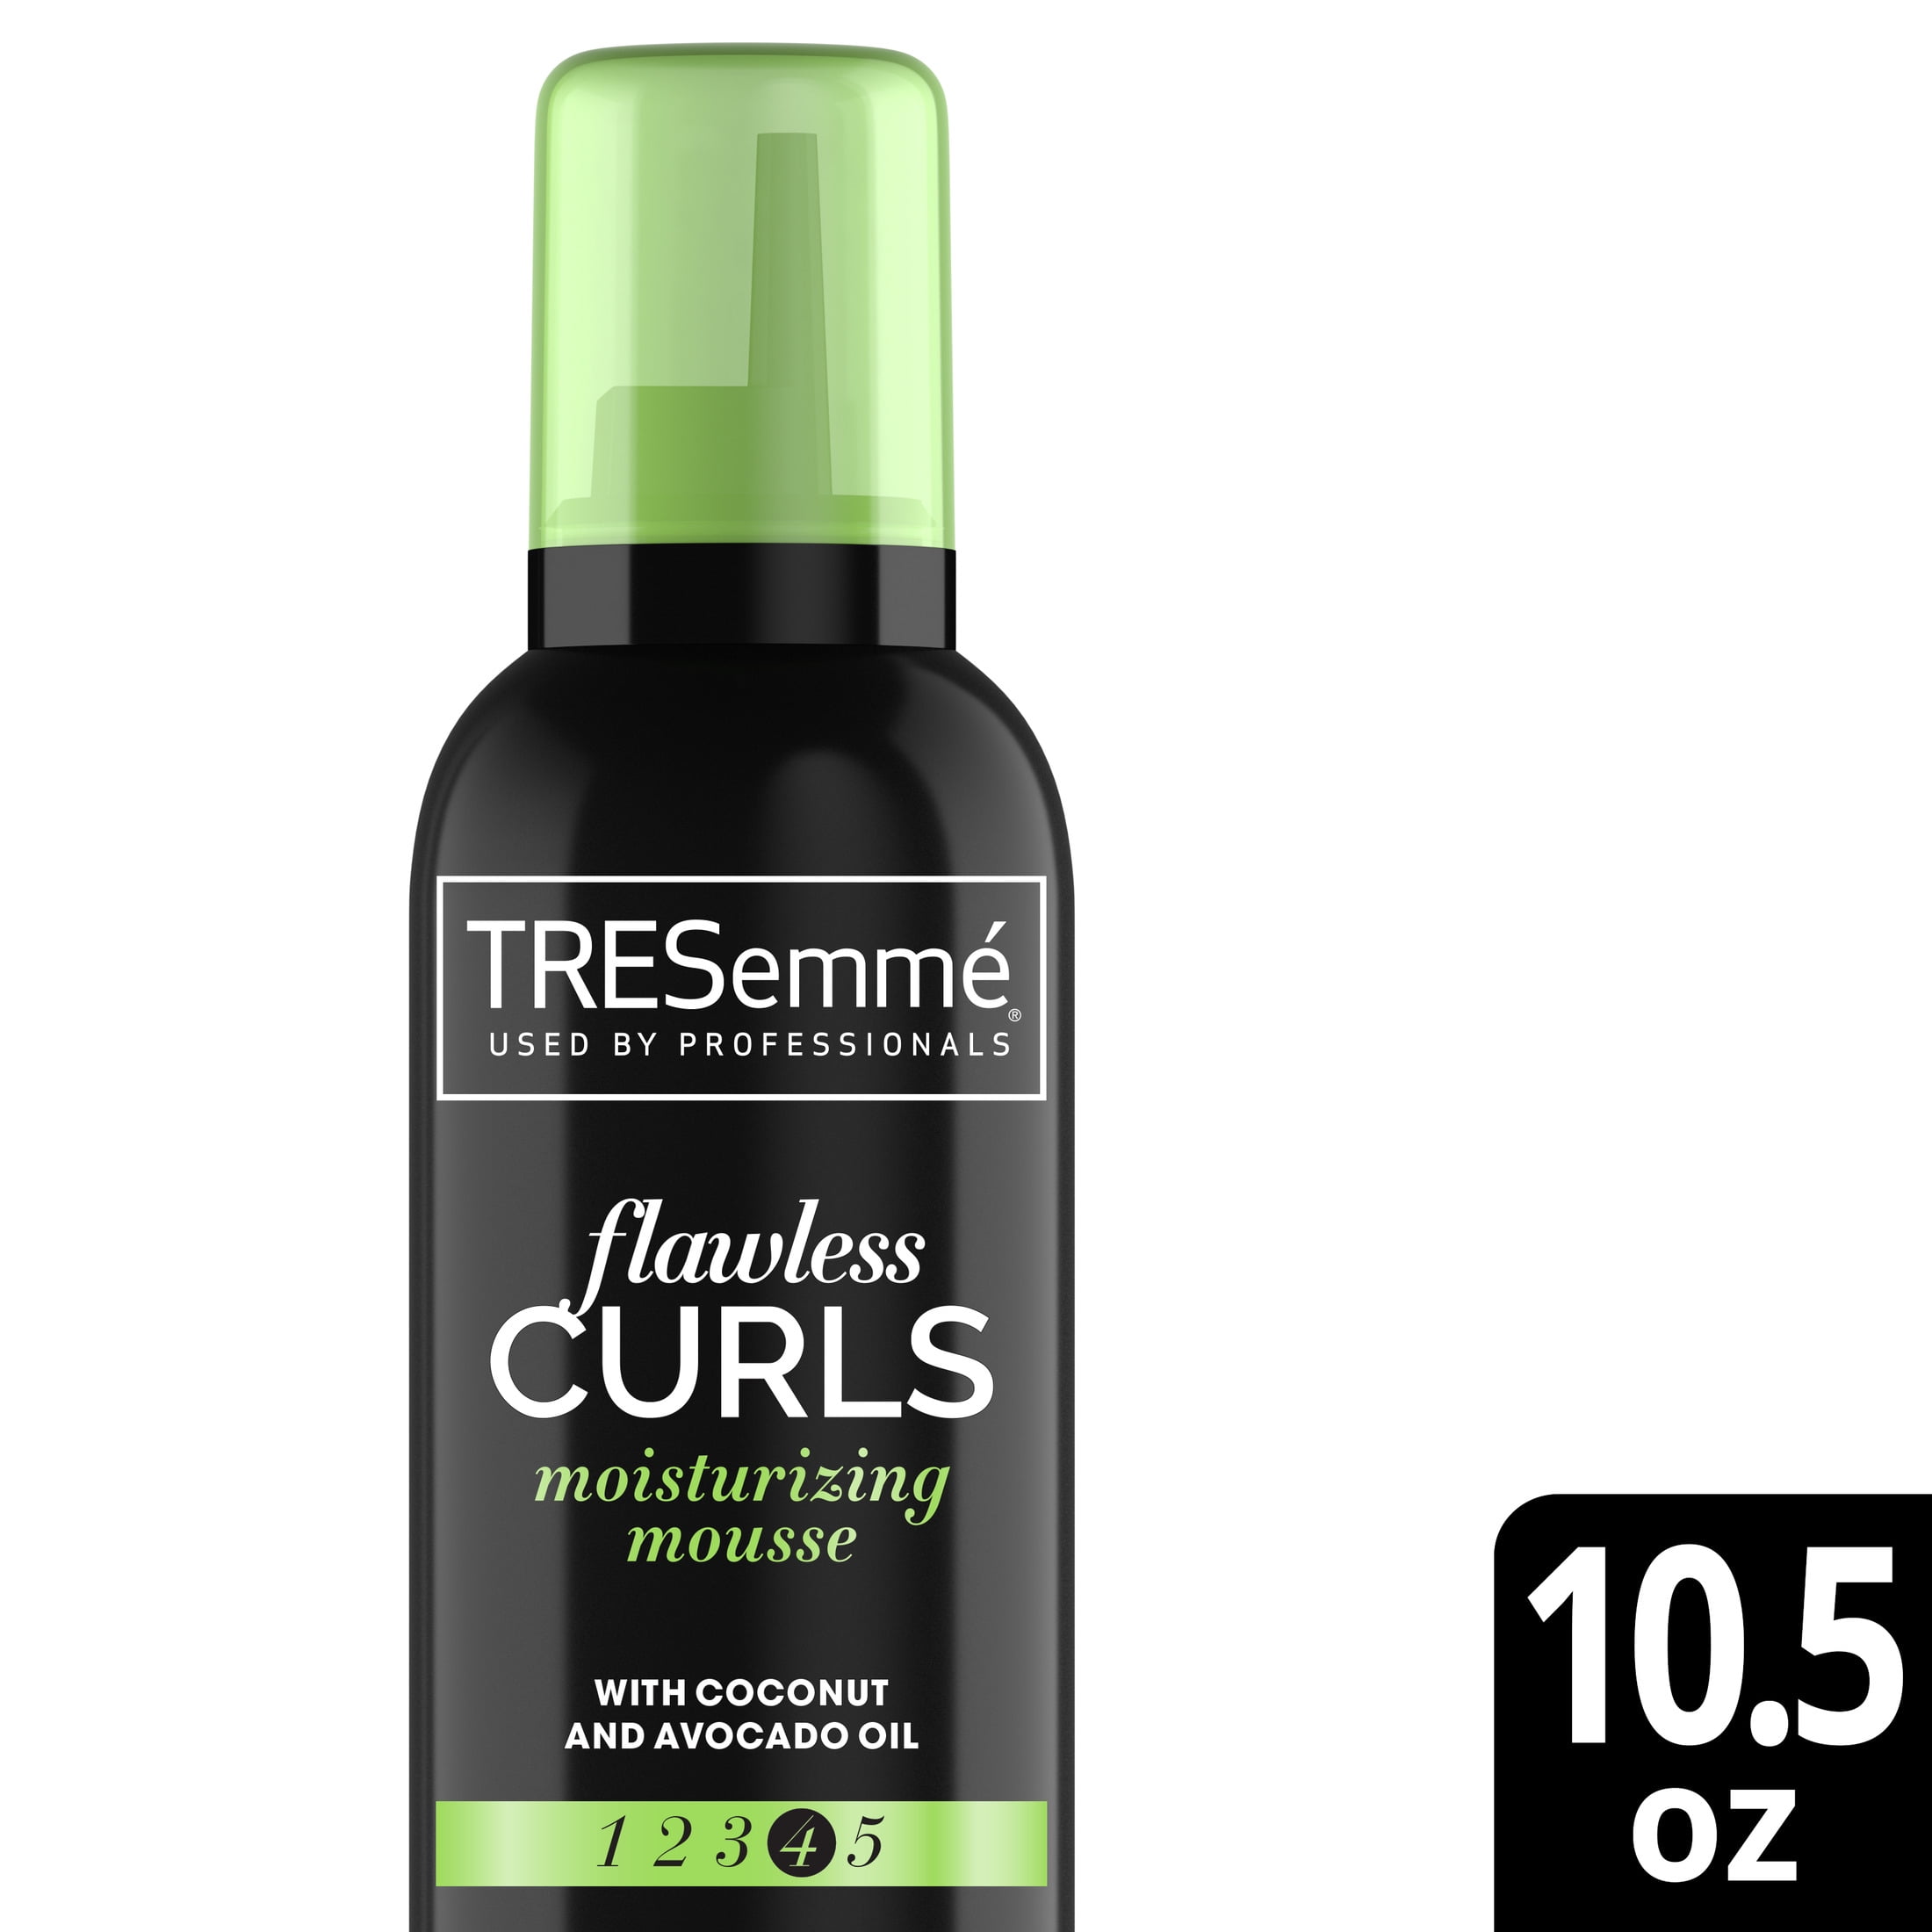 Curl 10. More inside Curl Mosturizing Mousse увлажняющий мусс 250 мл. TRESEMME flawless Curls шампунь как пользоваться.